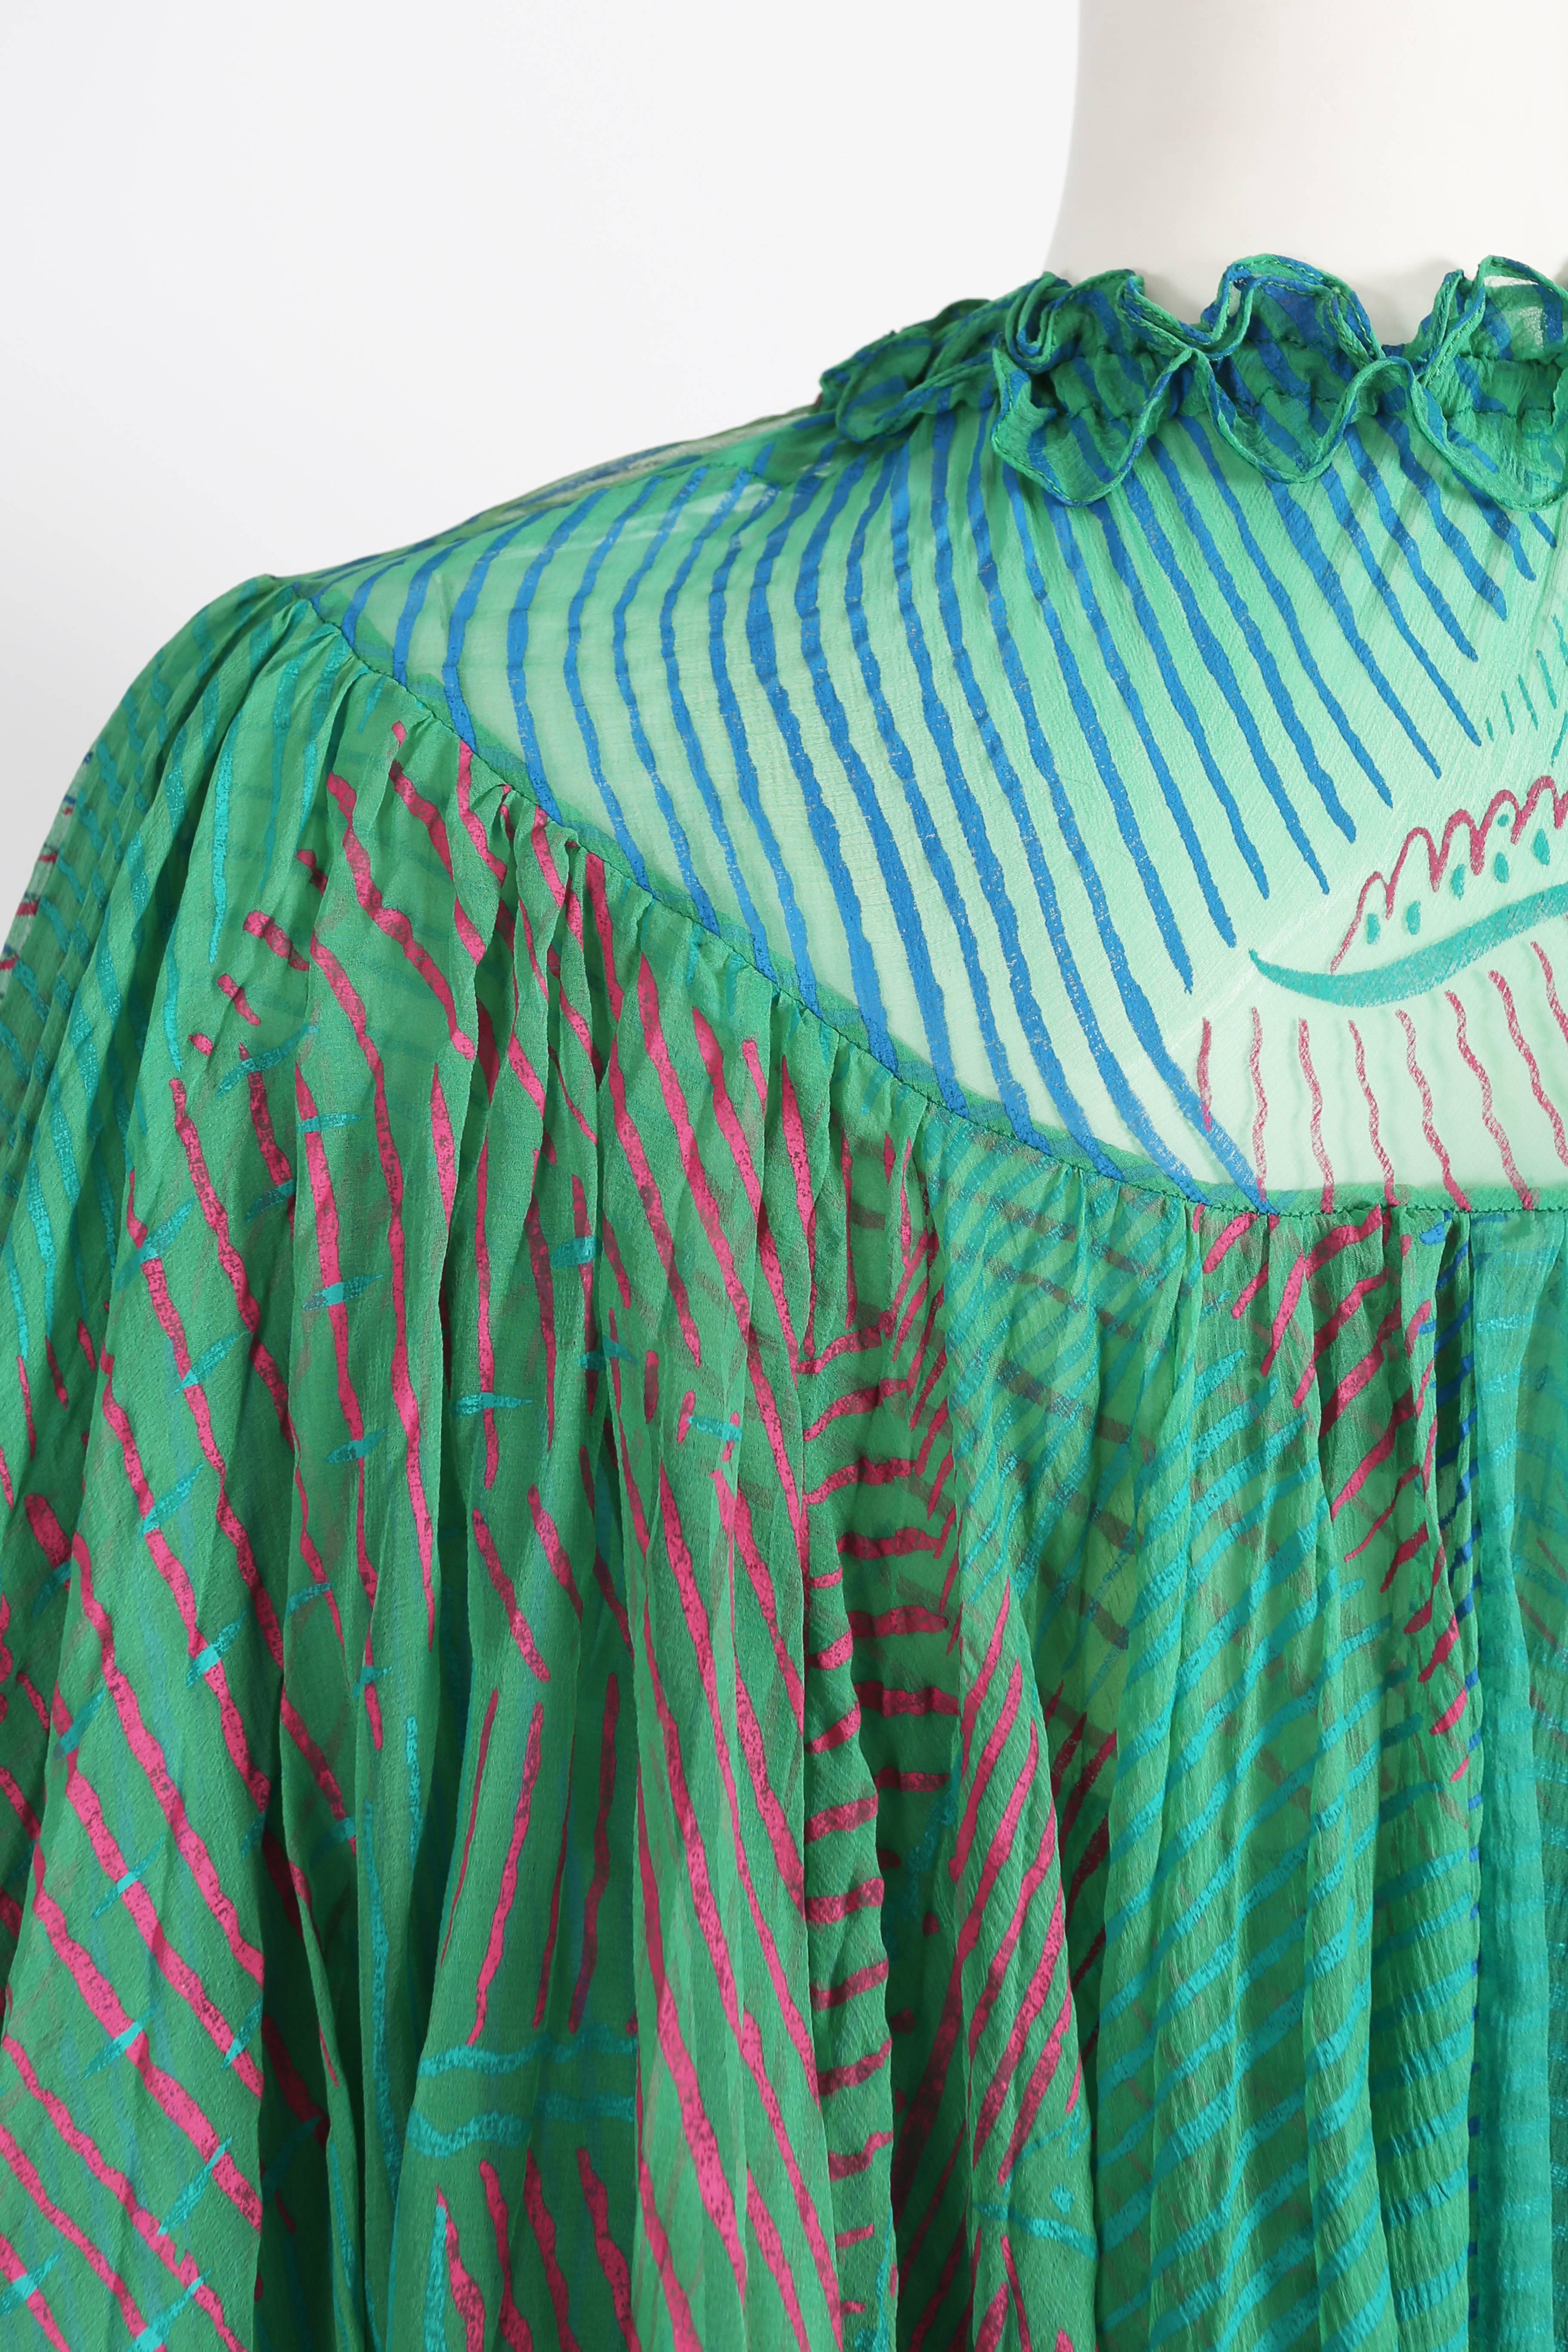 Ossie Clark Celia Birtwell couture silk chiffon screen-print dress, circa 1976 1